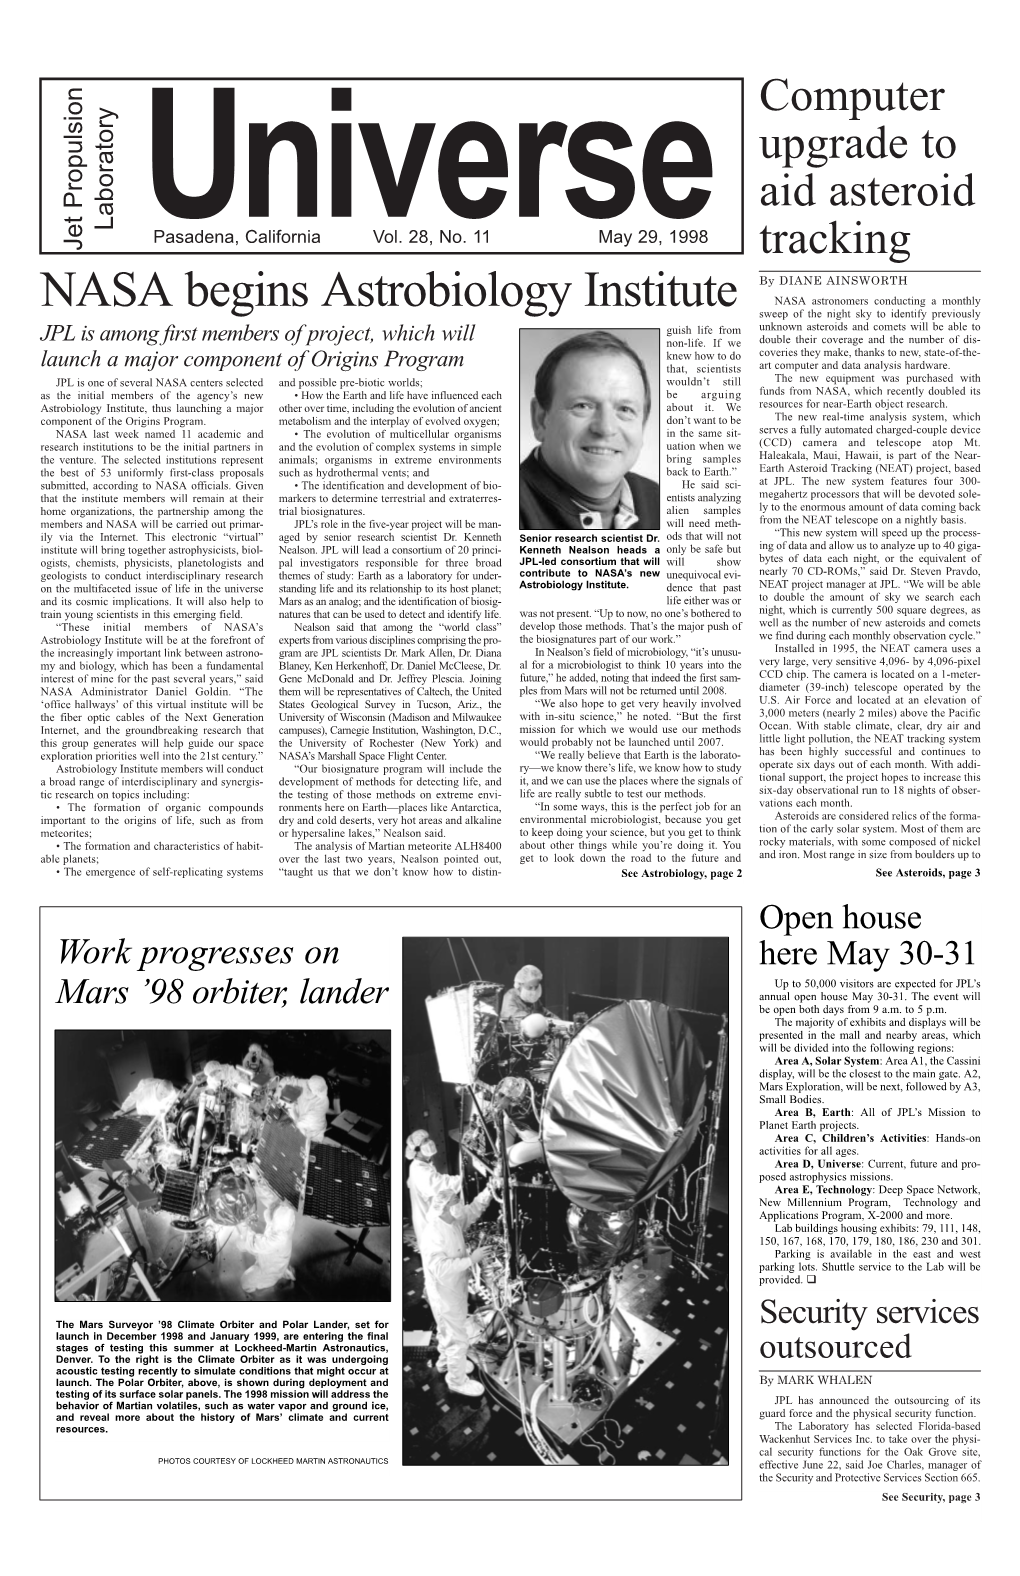 NASA Begins Astrobiology Institute